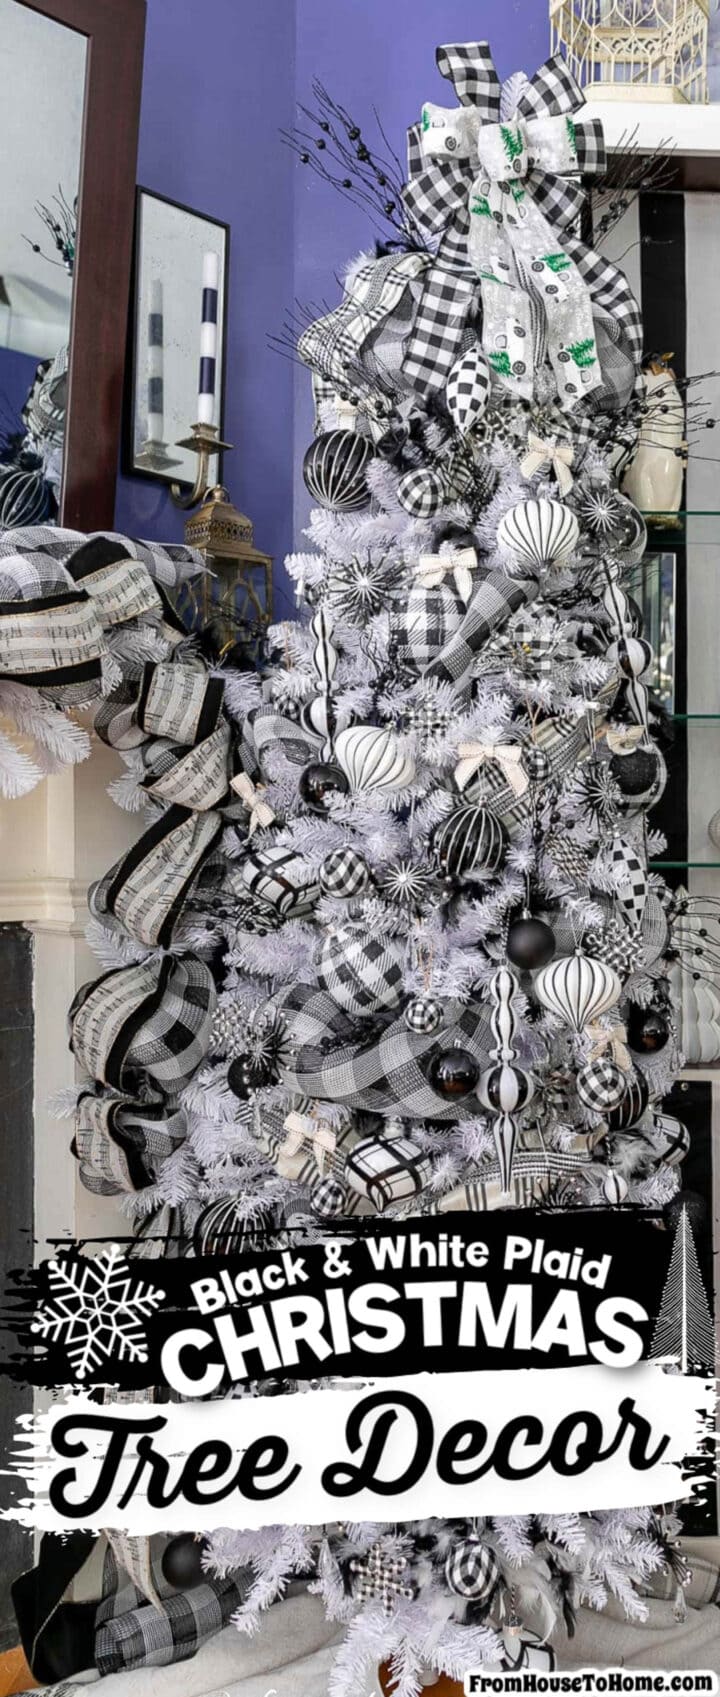 Black and white plaid Christmas tree decor.